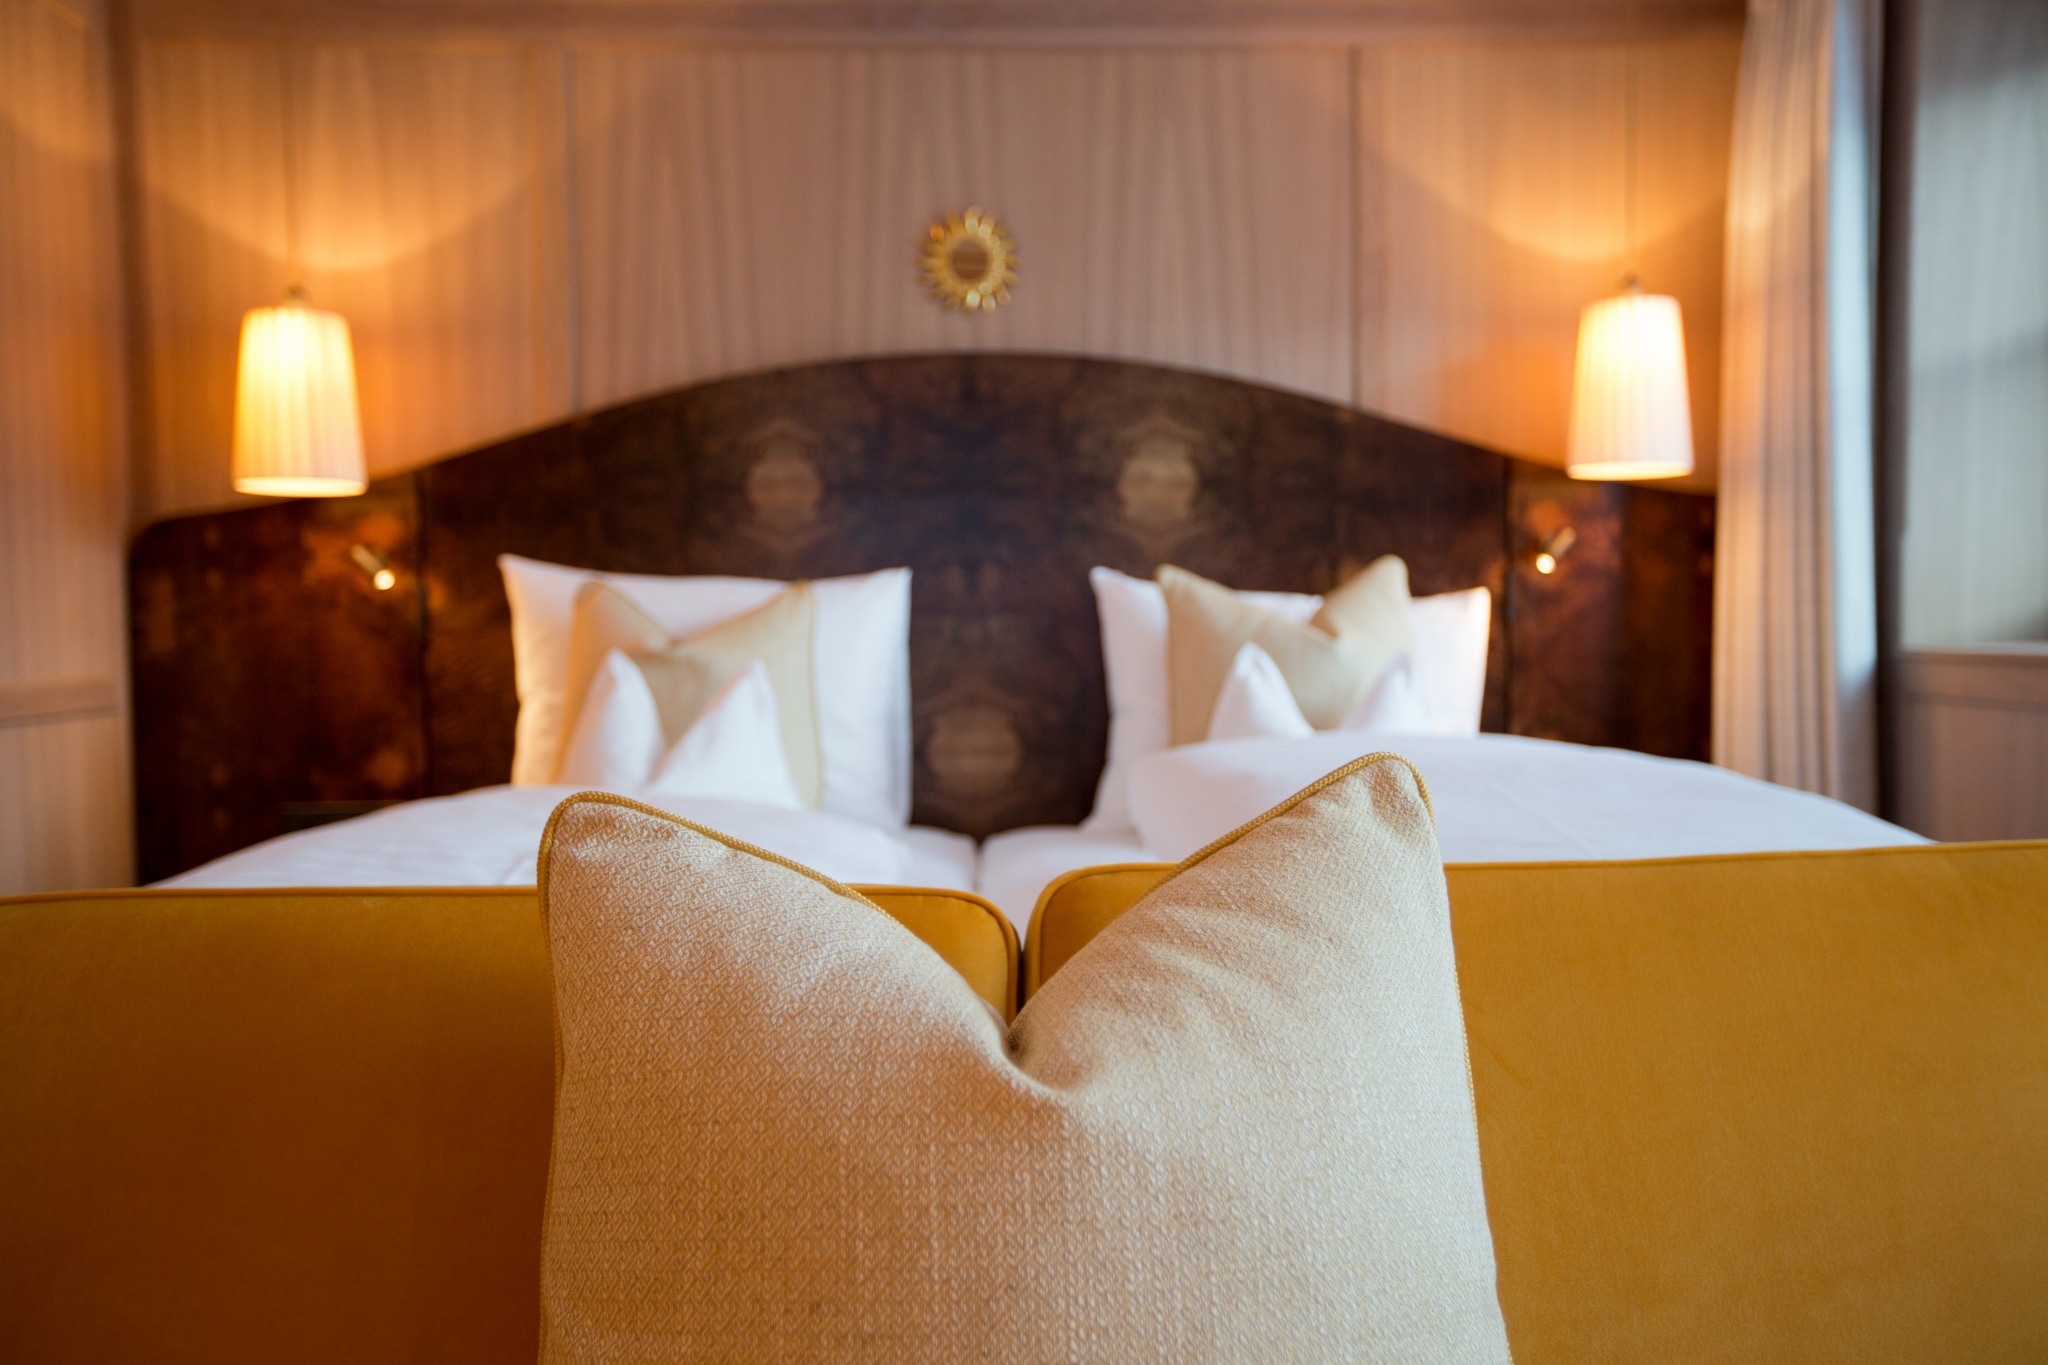 Luxuriöses Doppelbett bestehend aus zwei Boxspringbetten im 5 Sterne Hotel in Lech am Arlberg